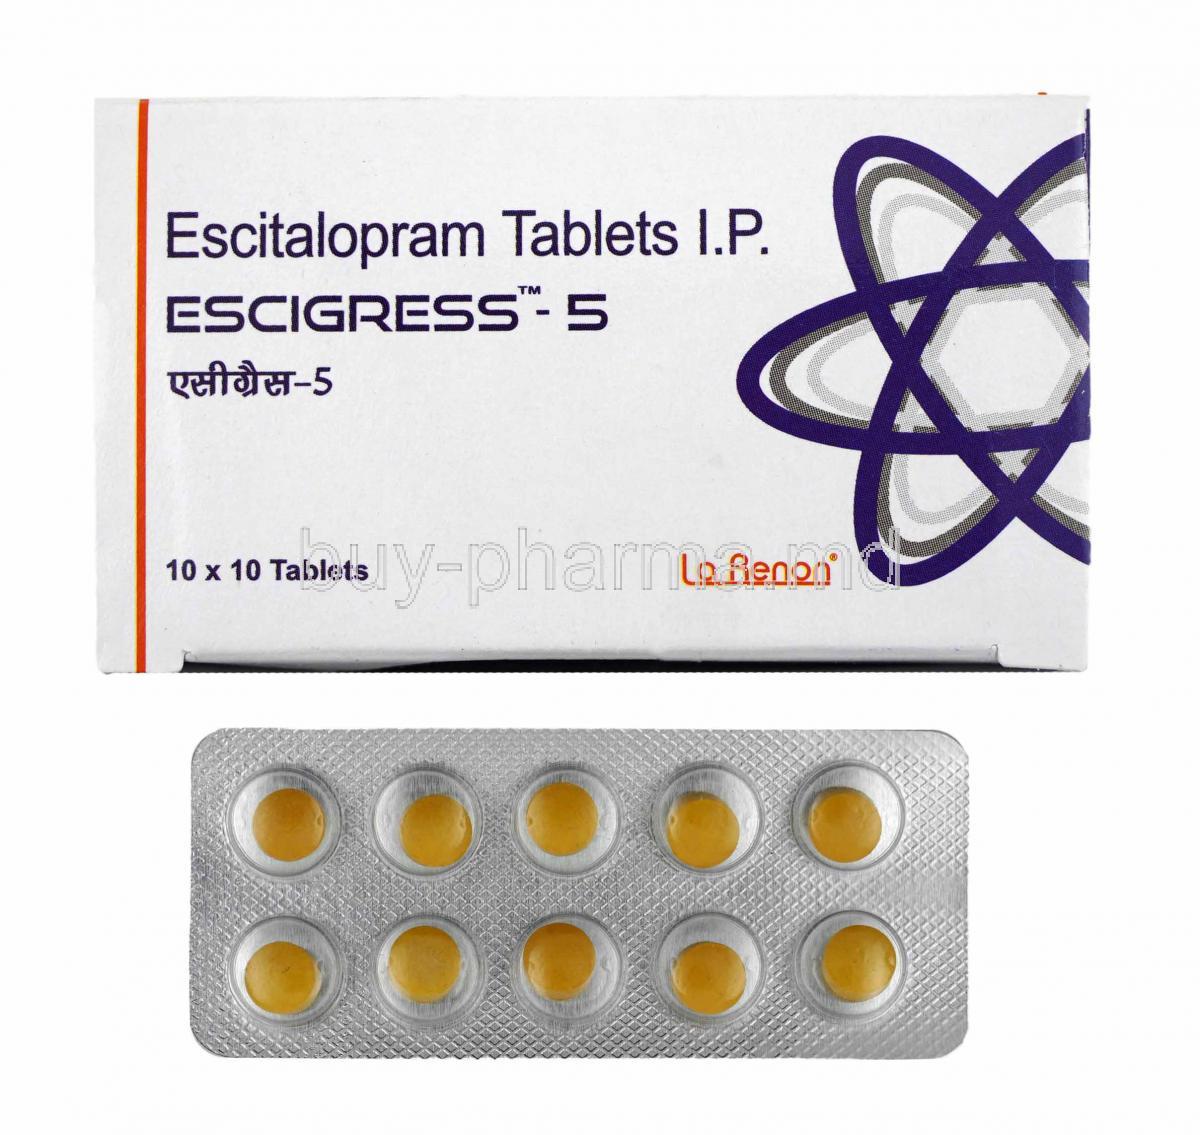 Escigress, Escitalopram 5mg box and tablets